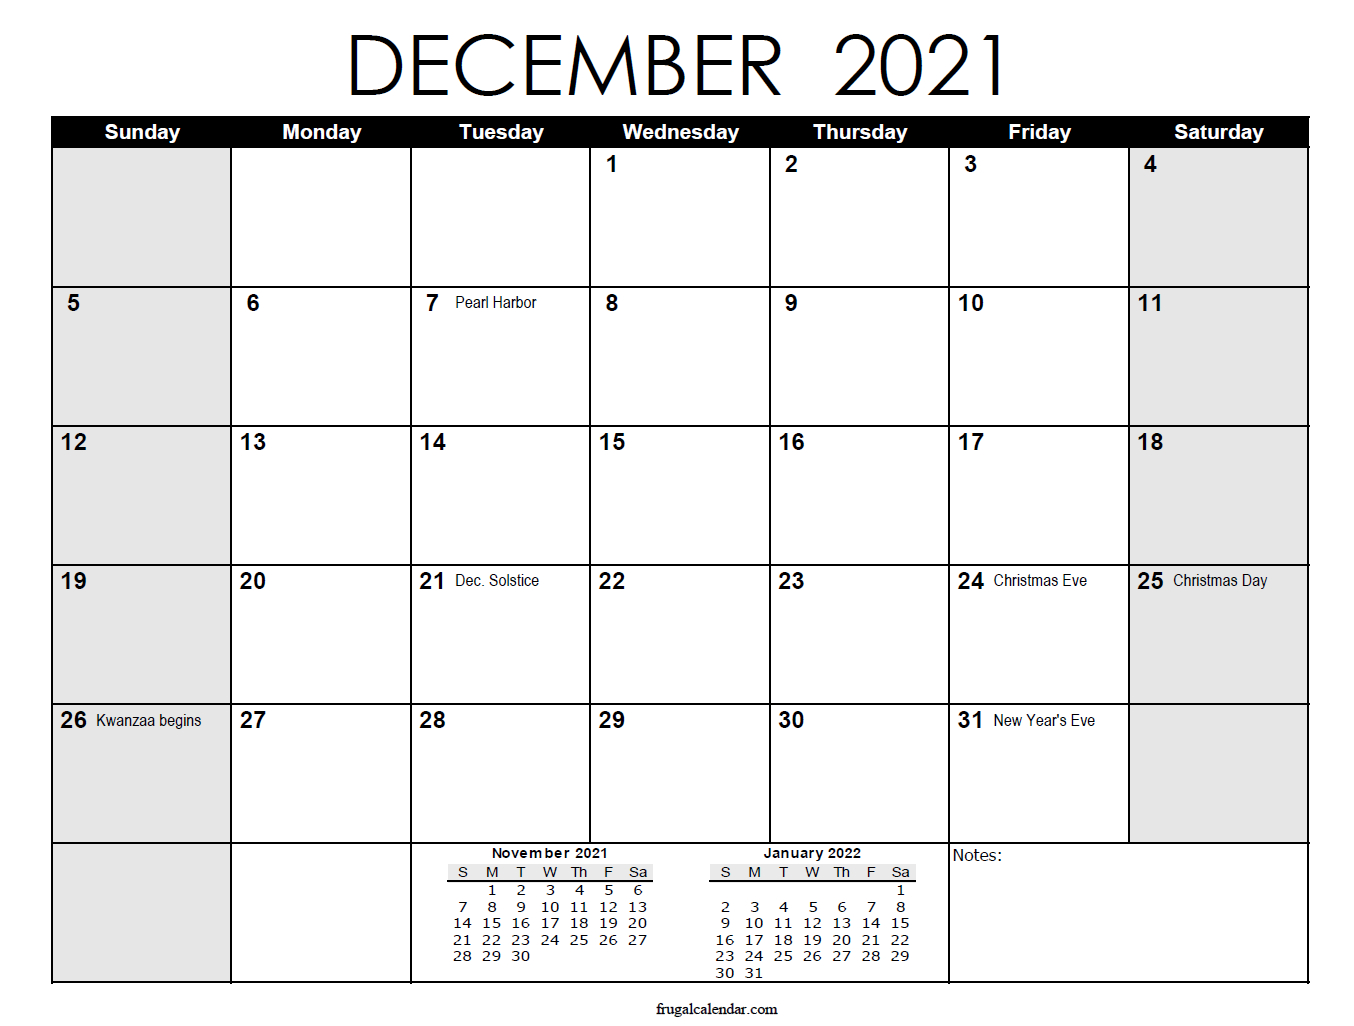 December Calendar 2021 | 2021 Calendars Printable December 2020 To December 2021 Calendar